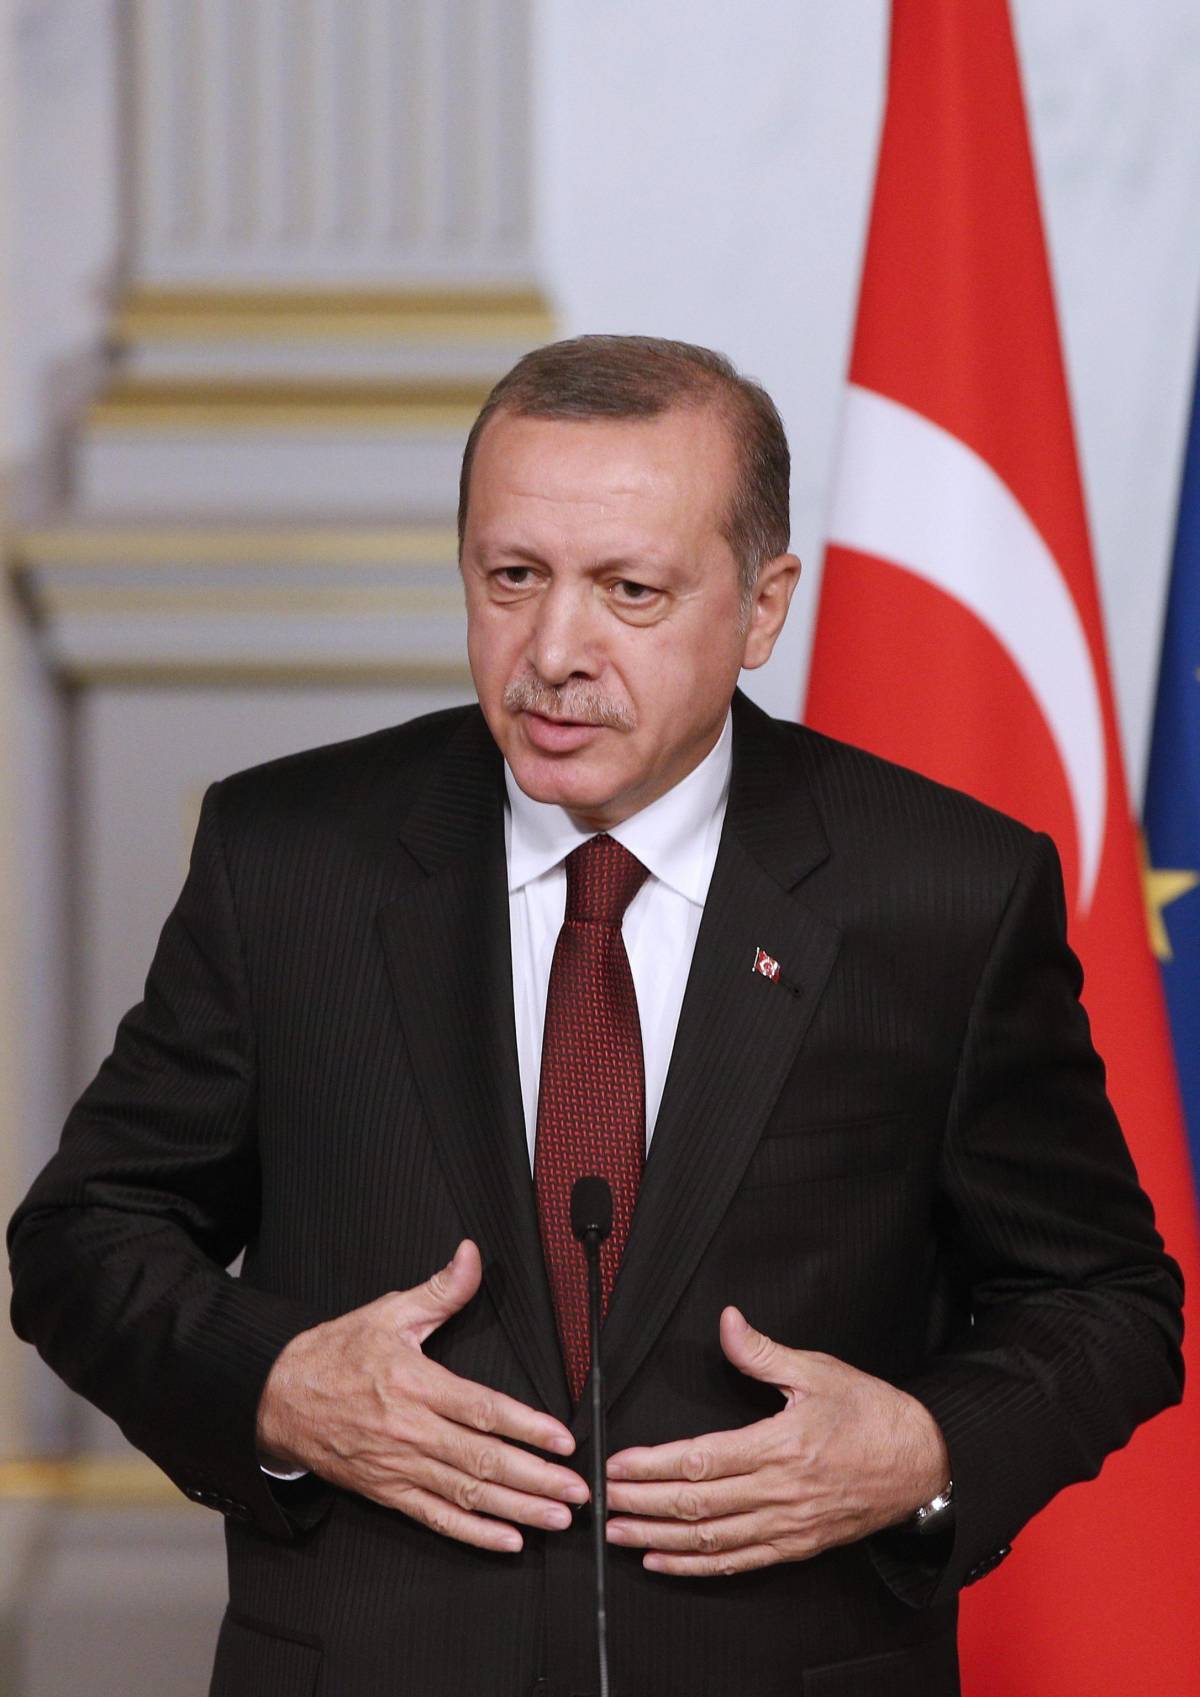 La teoria di Erdogan: "L'America fu scoperta dai musulmani"